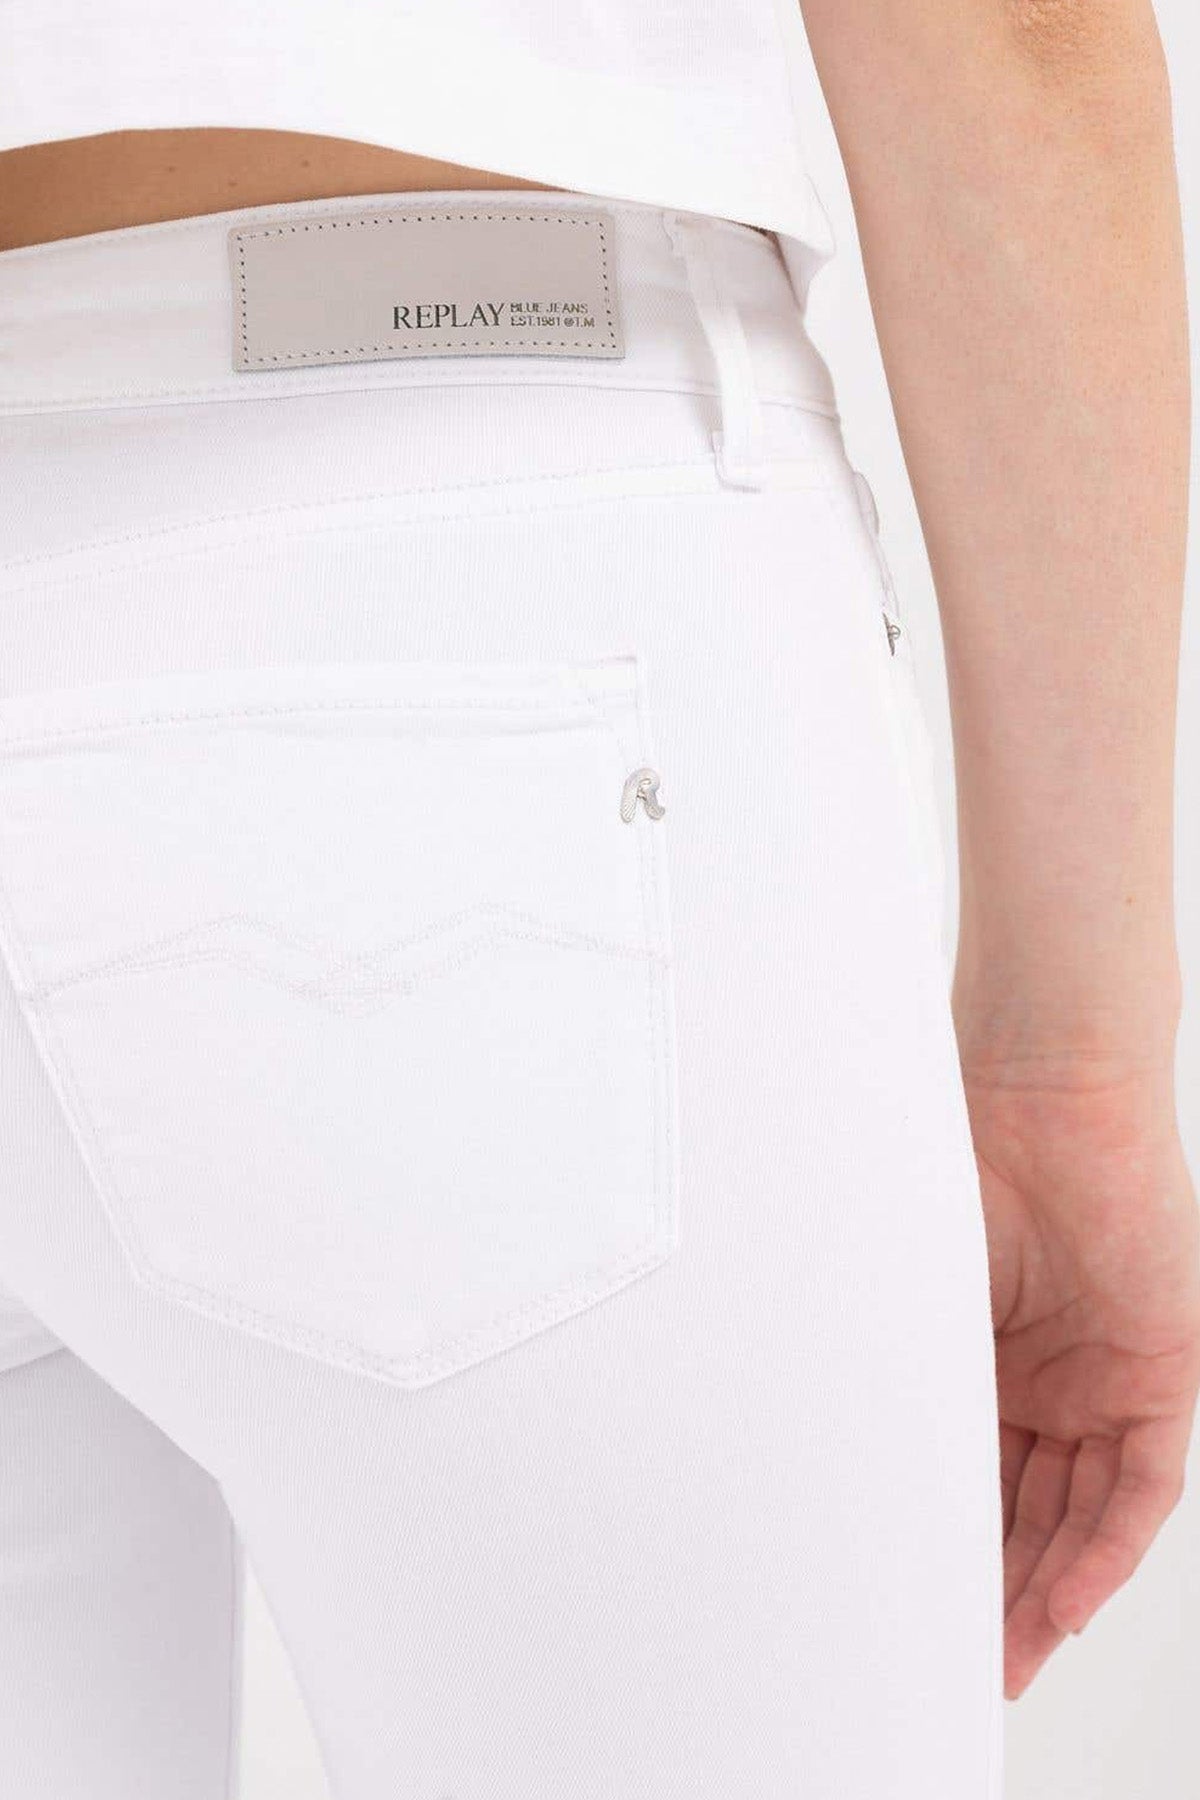 Replay Hyperflex X-Lite New Luz Skinny Fit Jeans